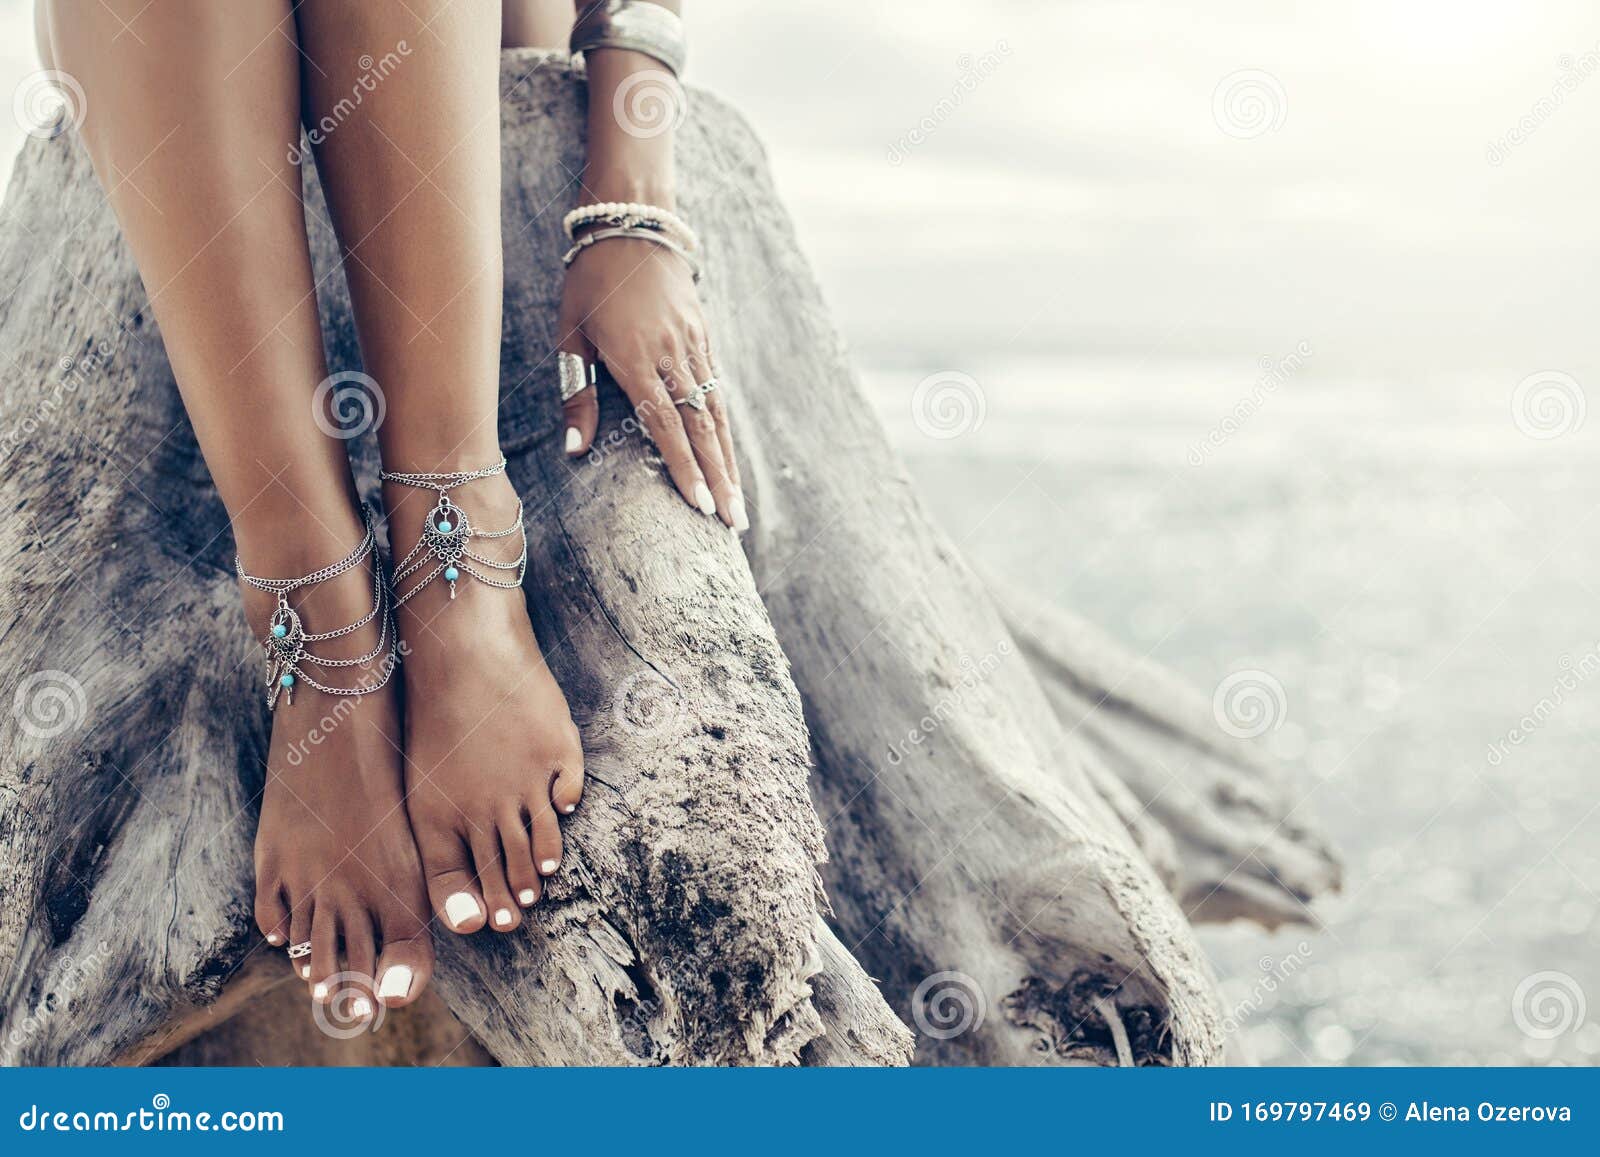 boho girl wearing indian silver jewelry on the beach